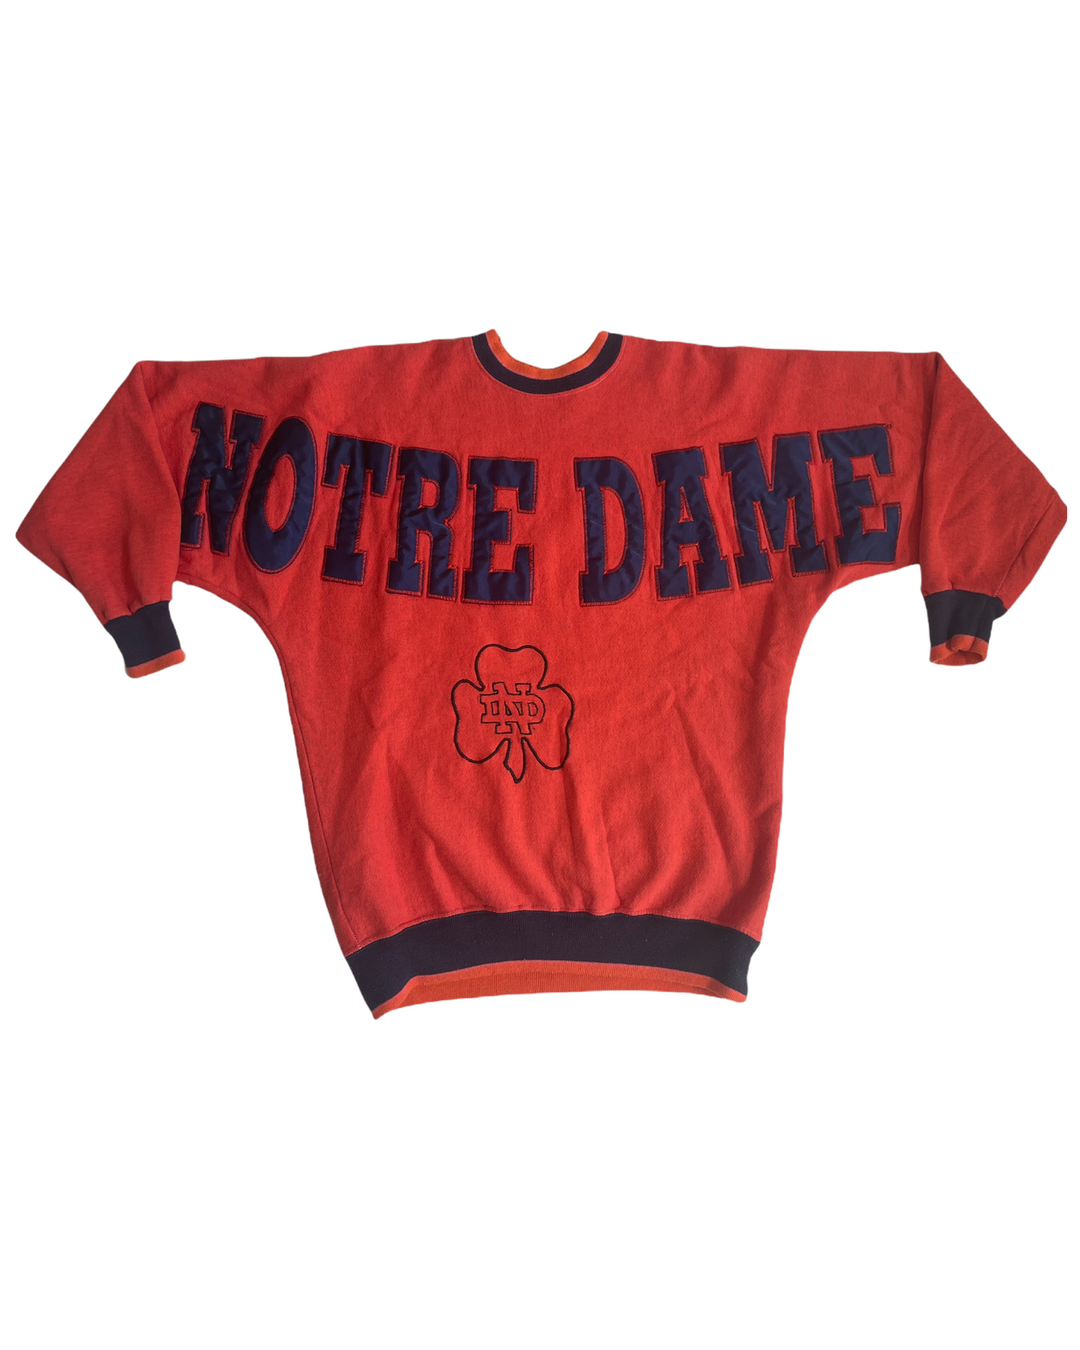 Norte Dame Vintage Spell Out Sweatshirt